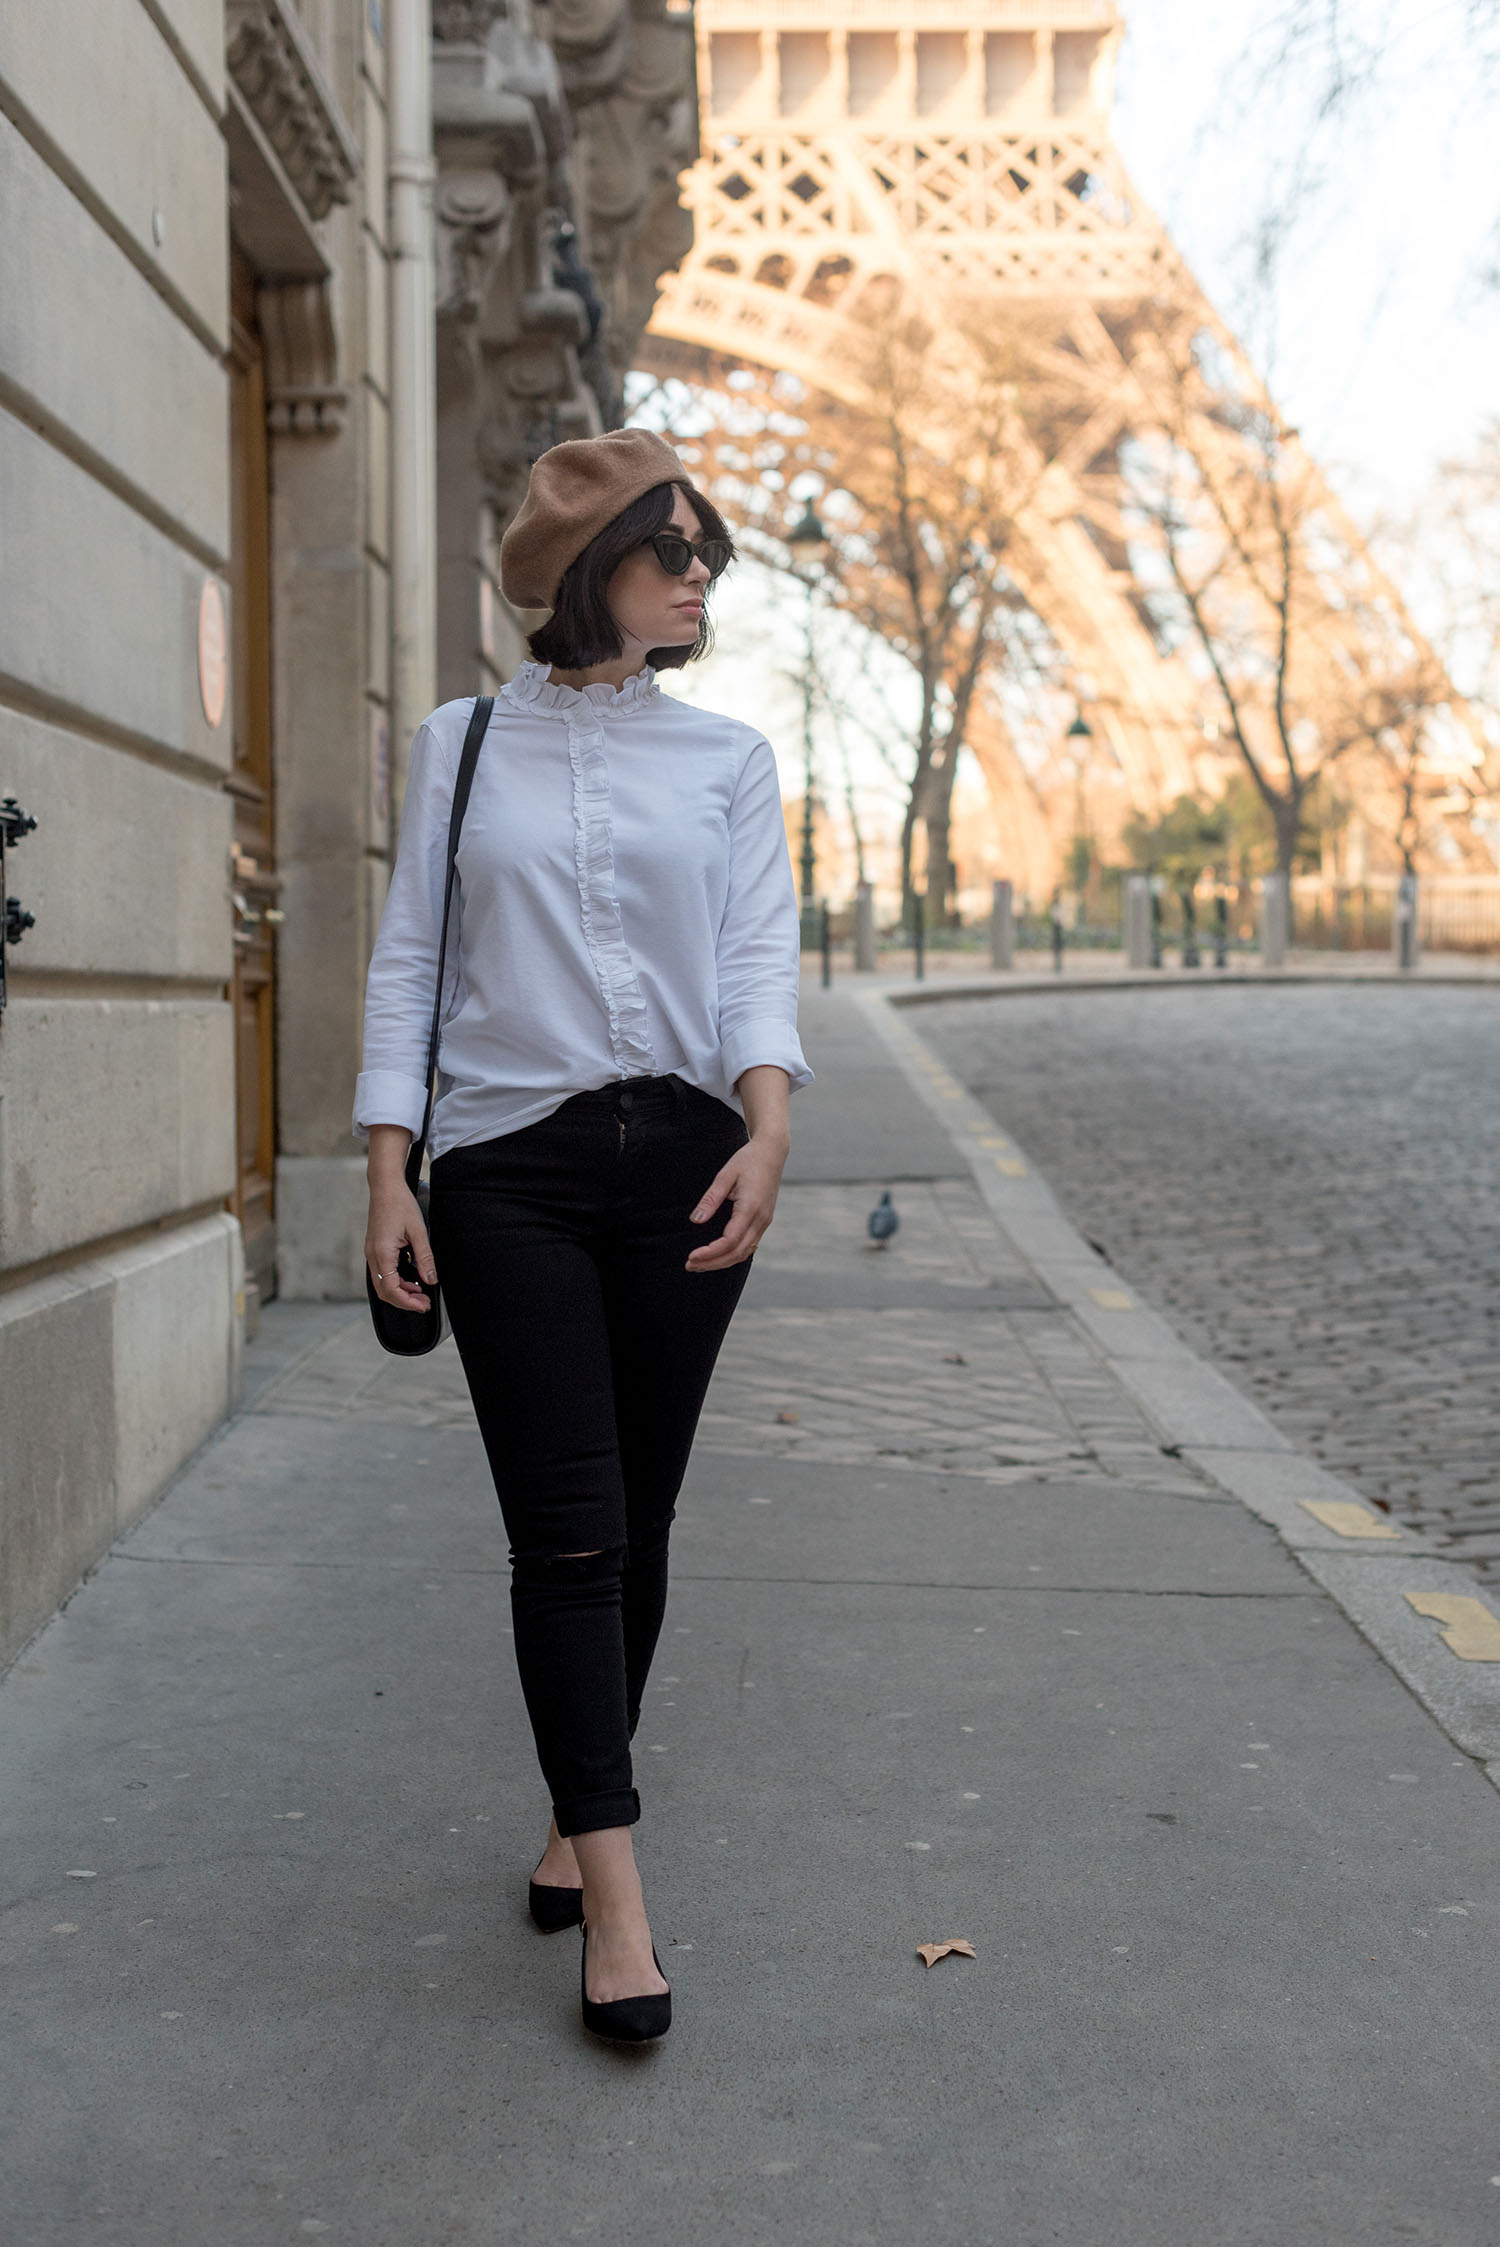 Top Winnipeg fashion blogger Cee Fardoe of Coco & Vera walks near the Eiffel Tower wearing Mavi jeans and a Sezane blouse